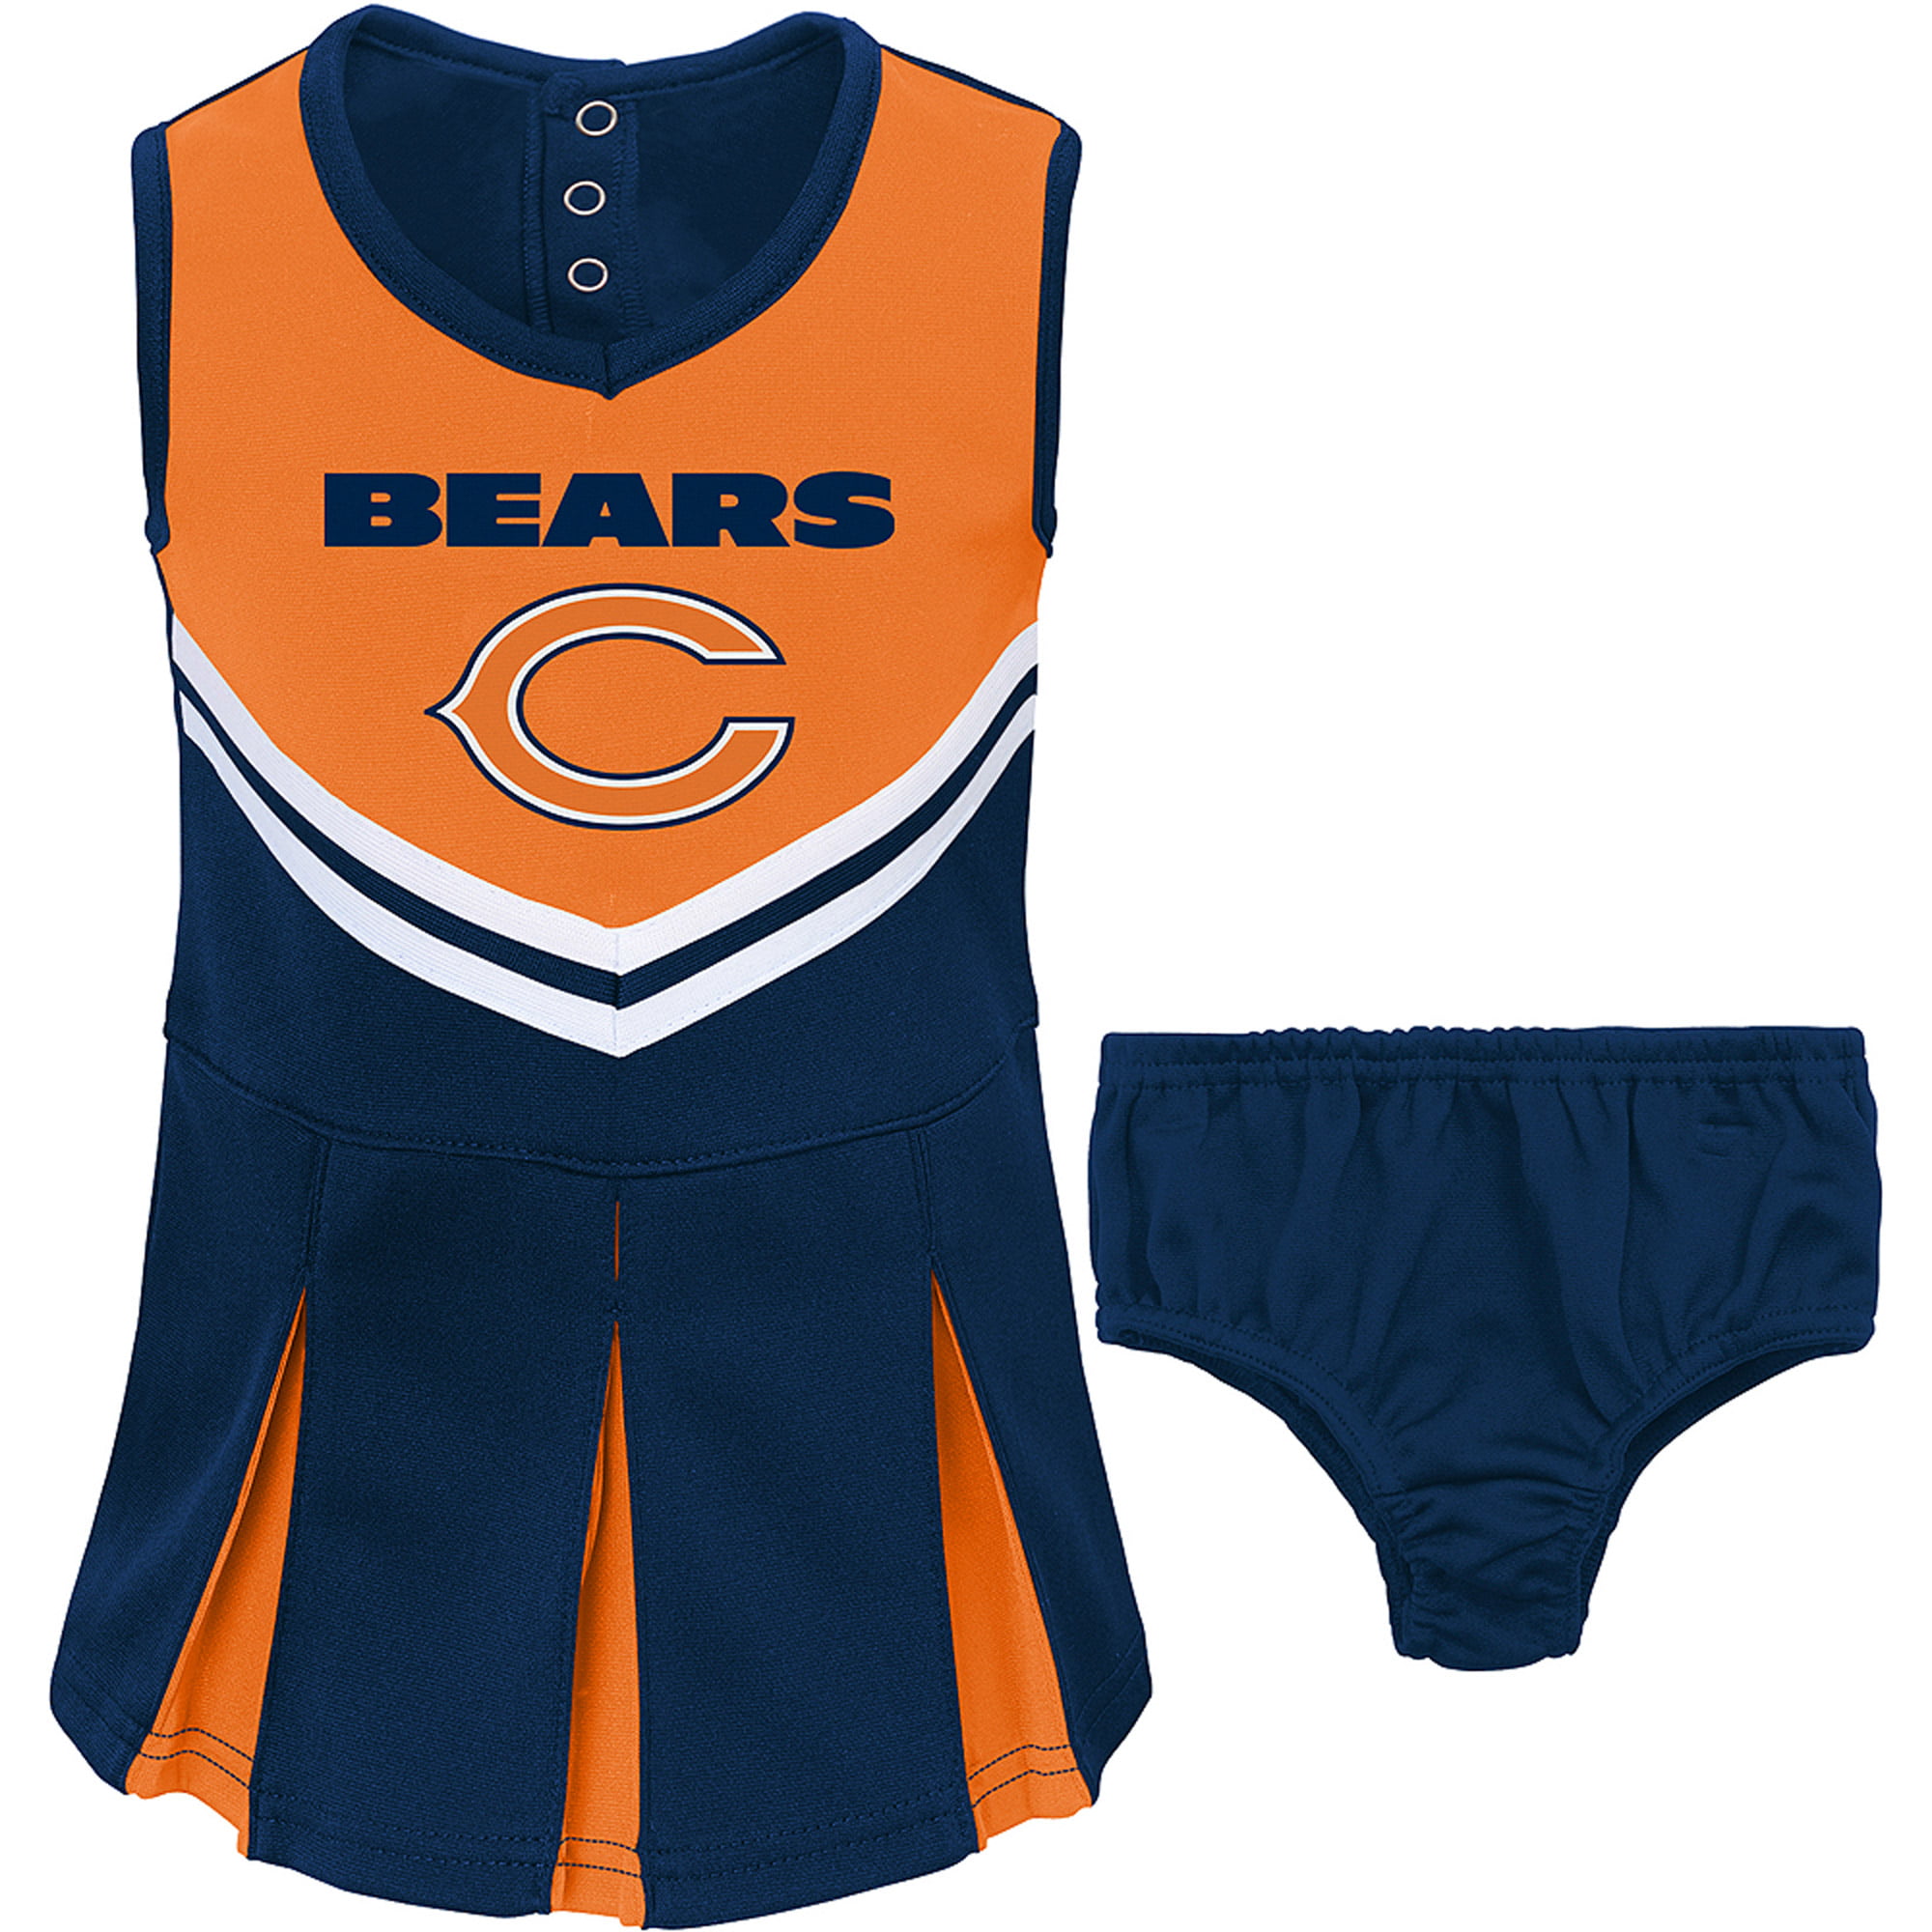 Bears Cheerleader Costume